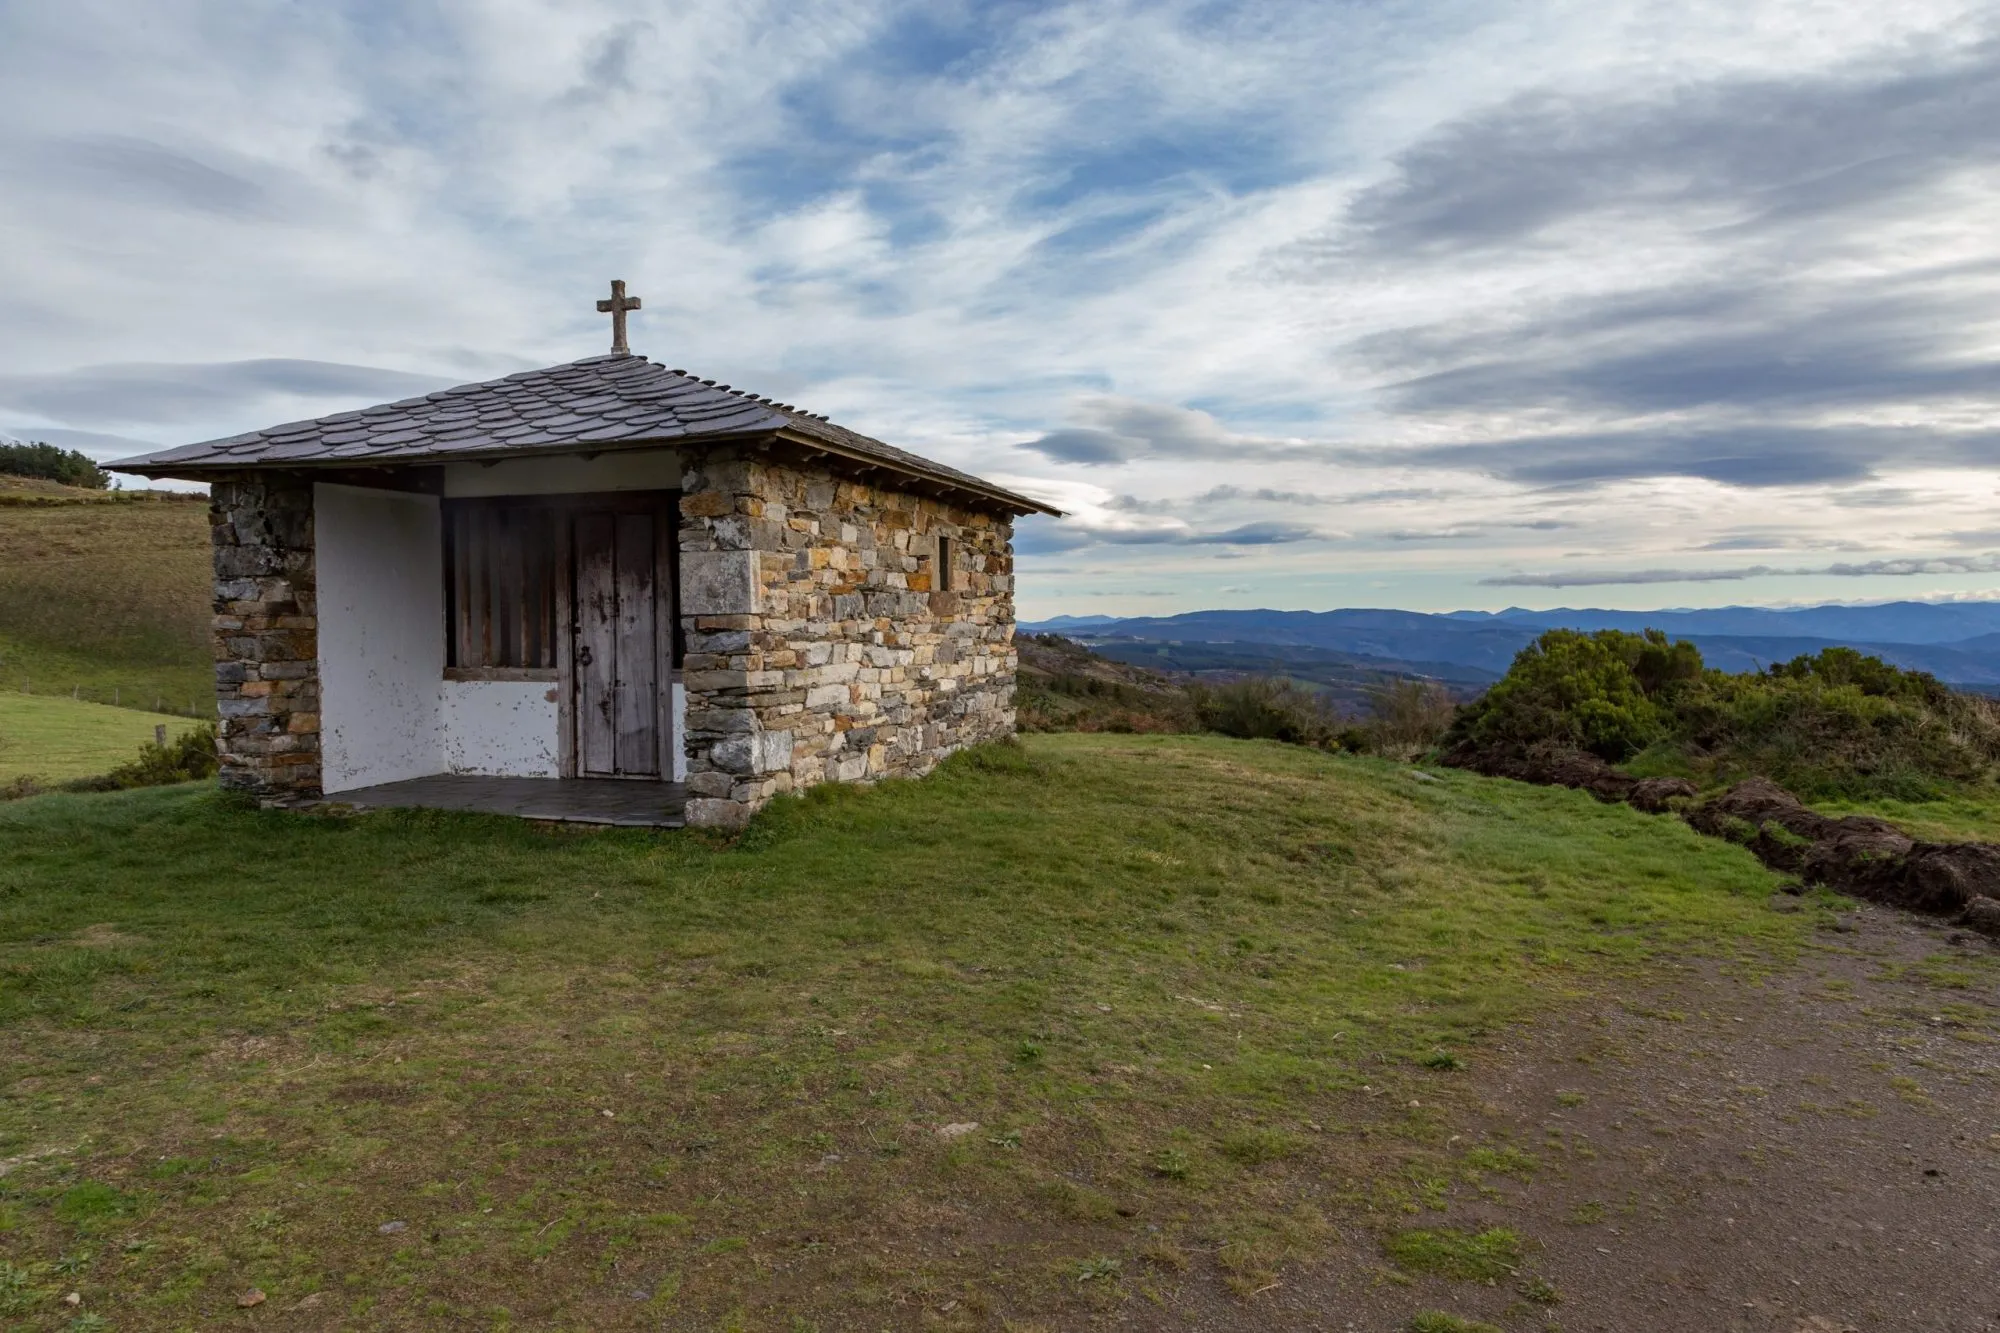 Small Chapel at Montouto on the Camino Primitivo a World Heritage